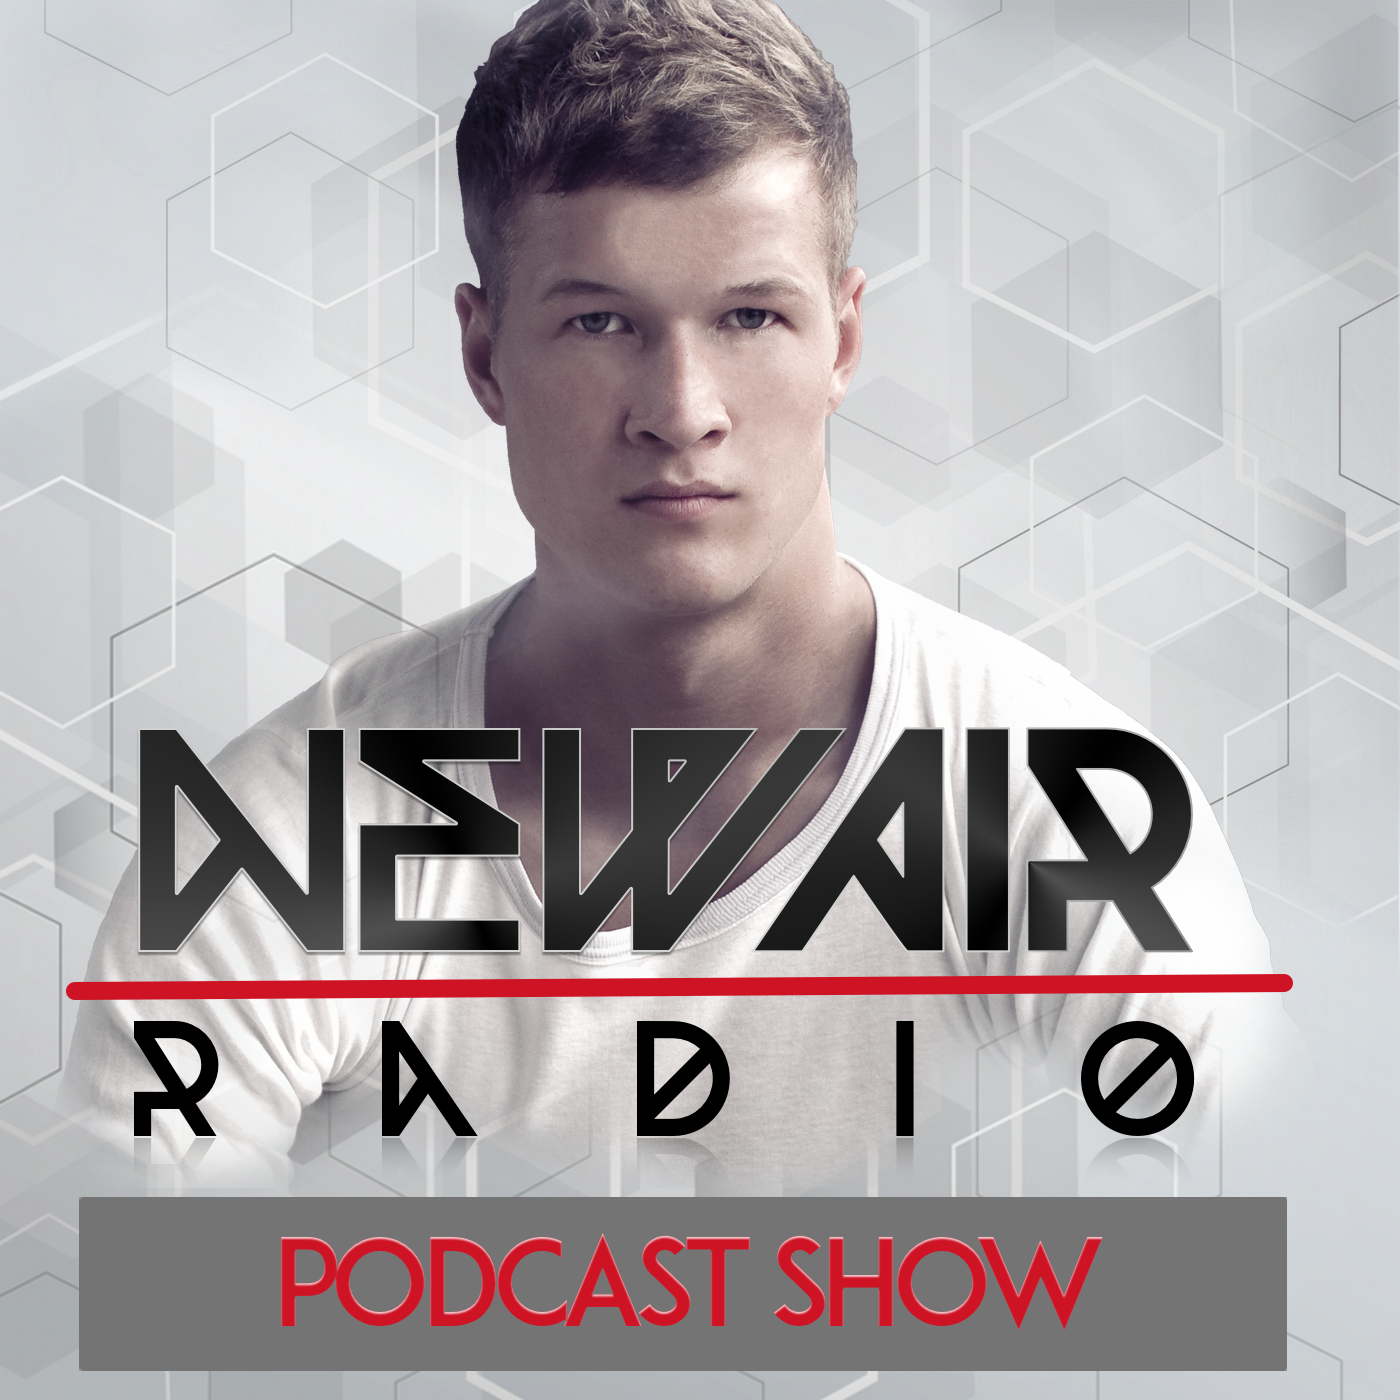 Podcast – New Air Radio